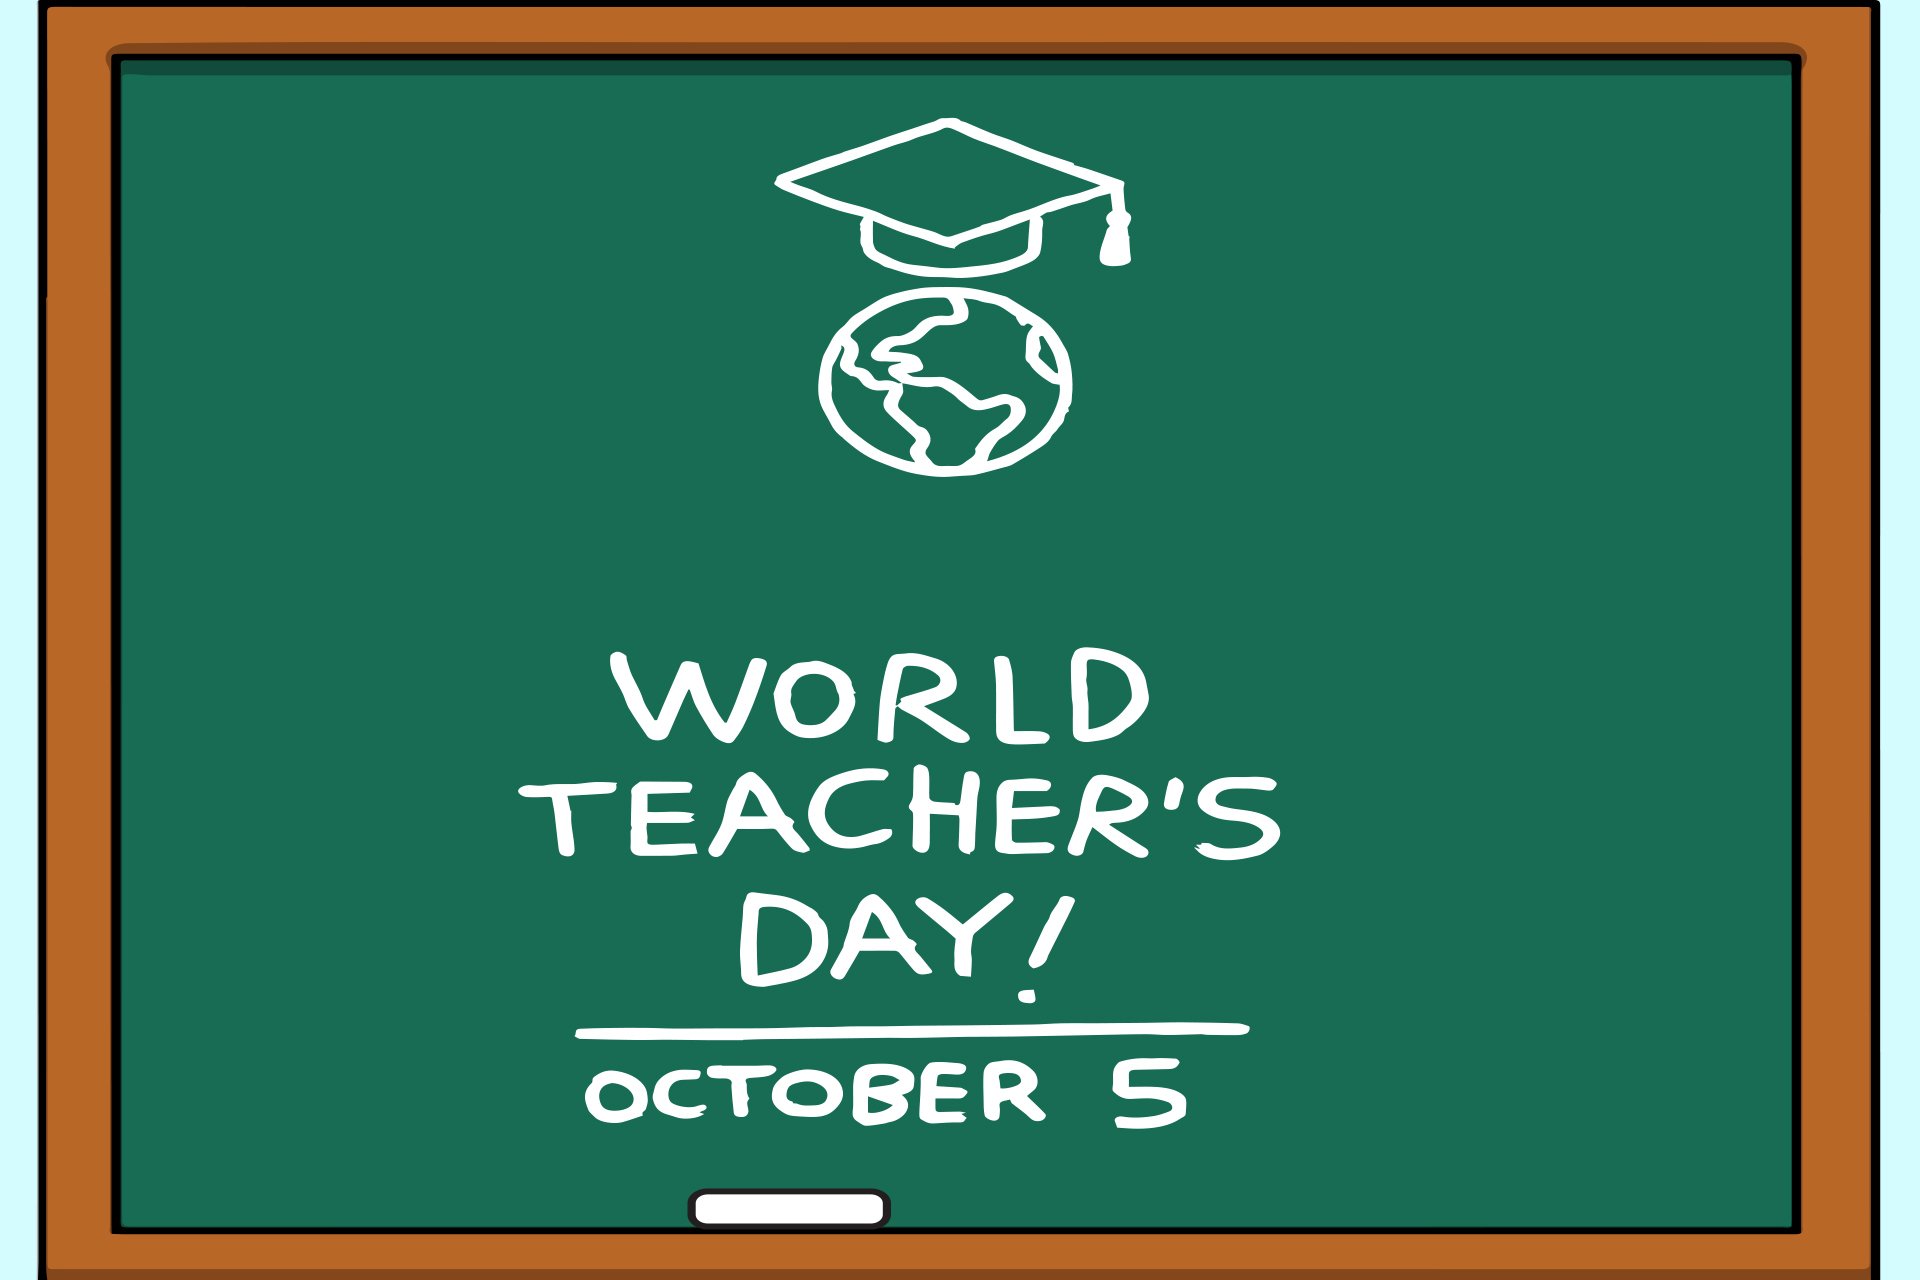 Best image teachers day. 20 Best Teacher image in. Presents for teachers, School, Teachers' day